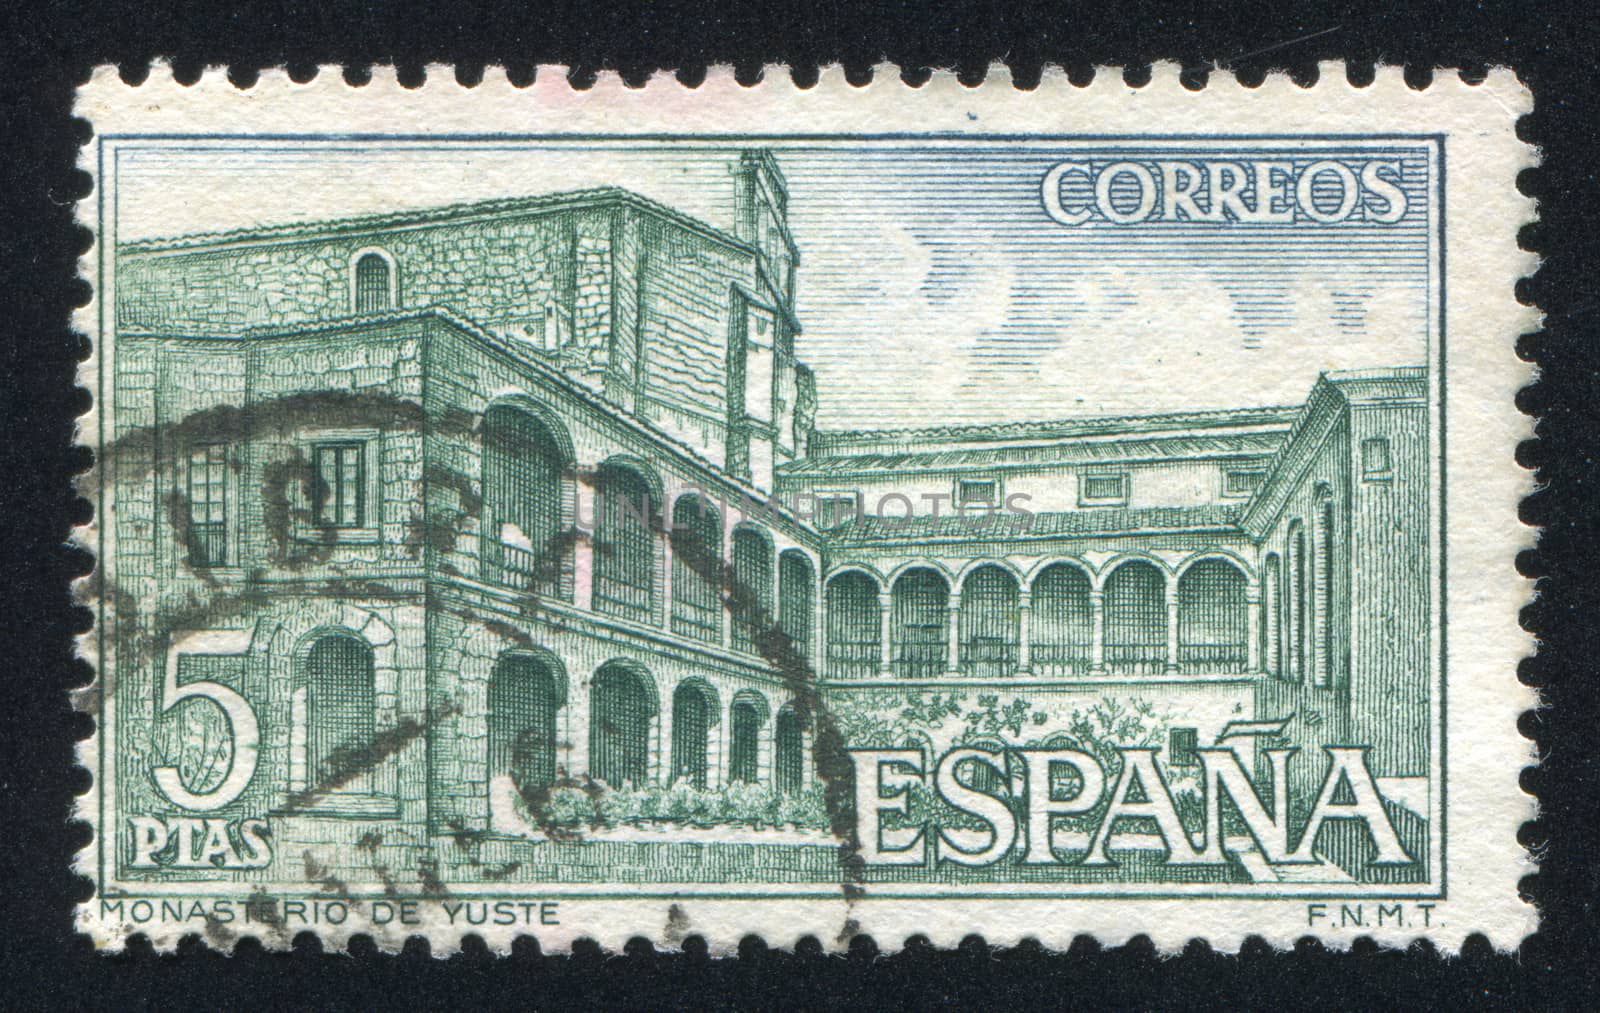 SPAIN - CIRCA 1965: stamp printed by Spain, shows Yuste Monastery, View of monastery, circa 1965